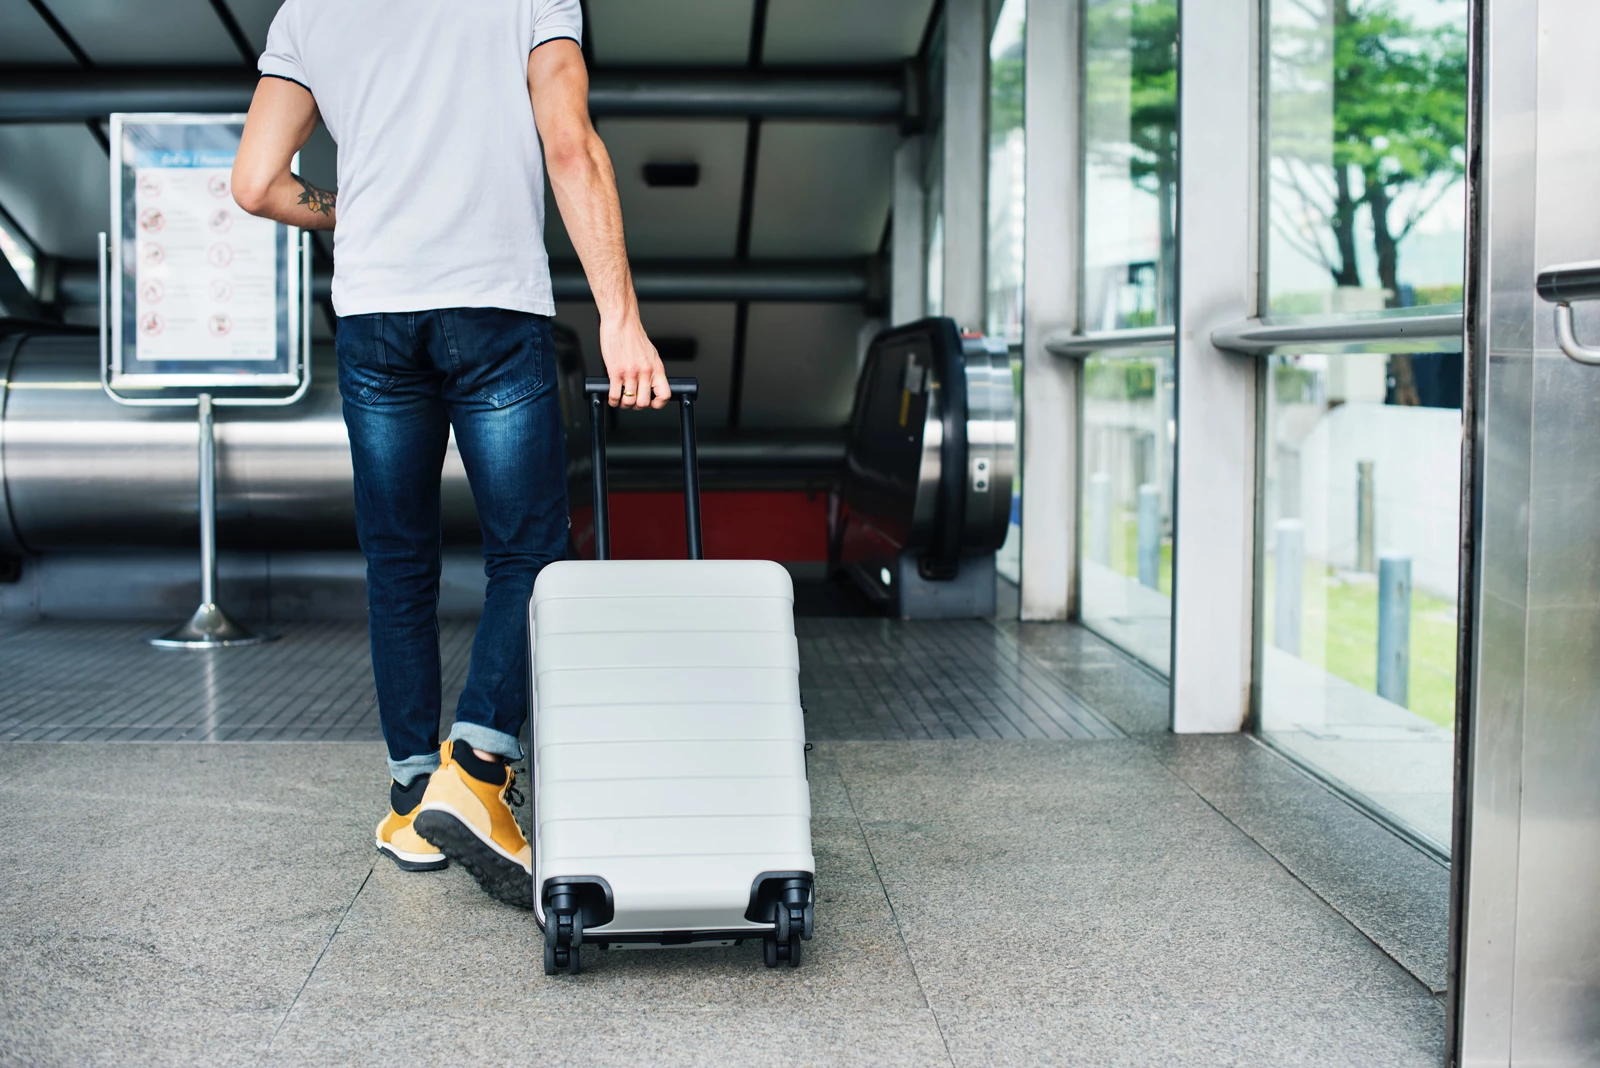 Man walking through airport with suitcase